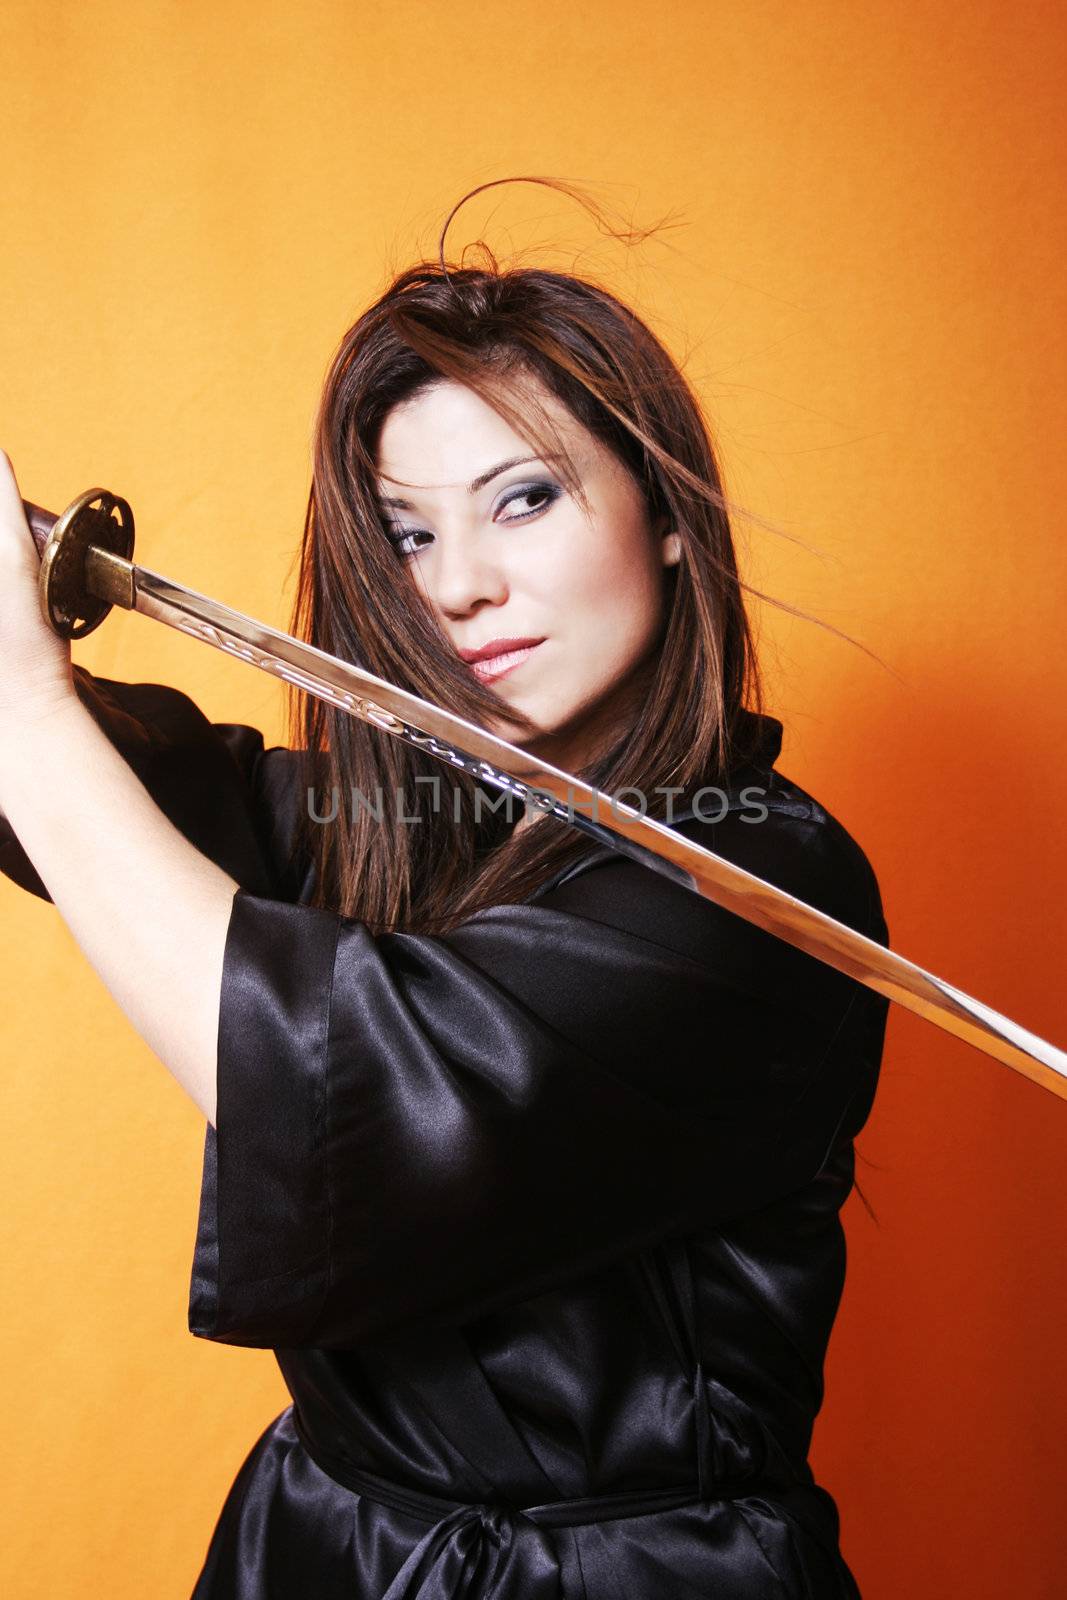 Woman swings a sword, hair swooshes, eyes intent. 